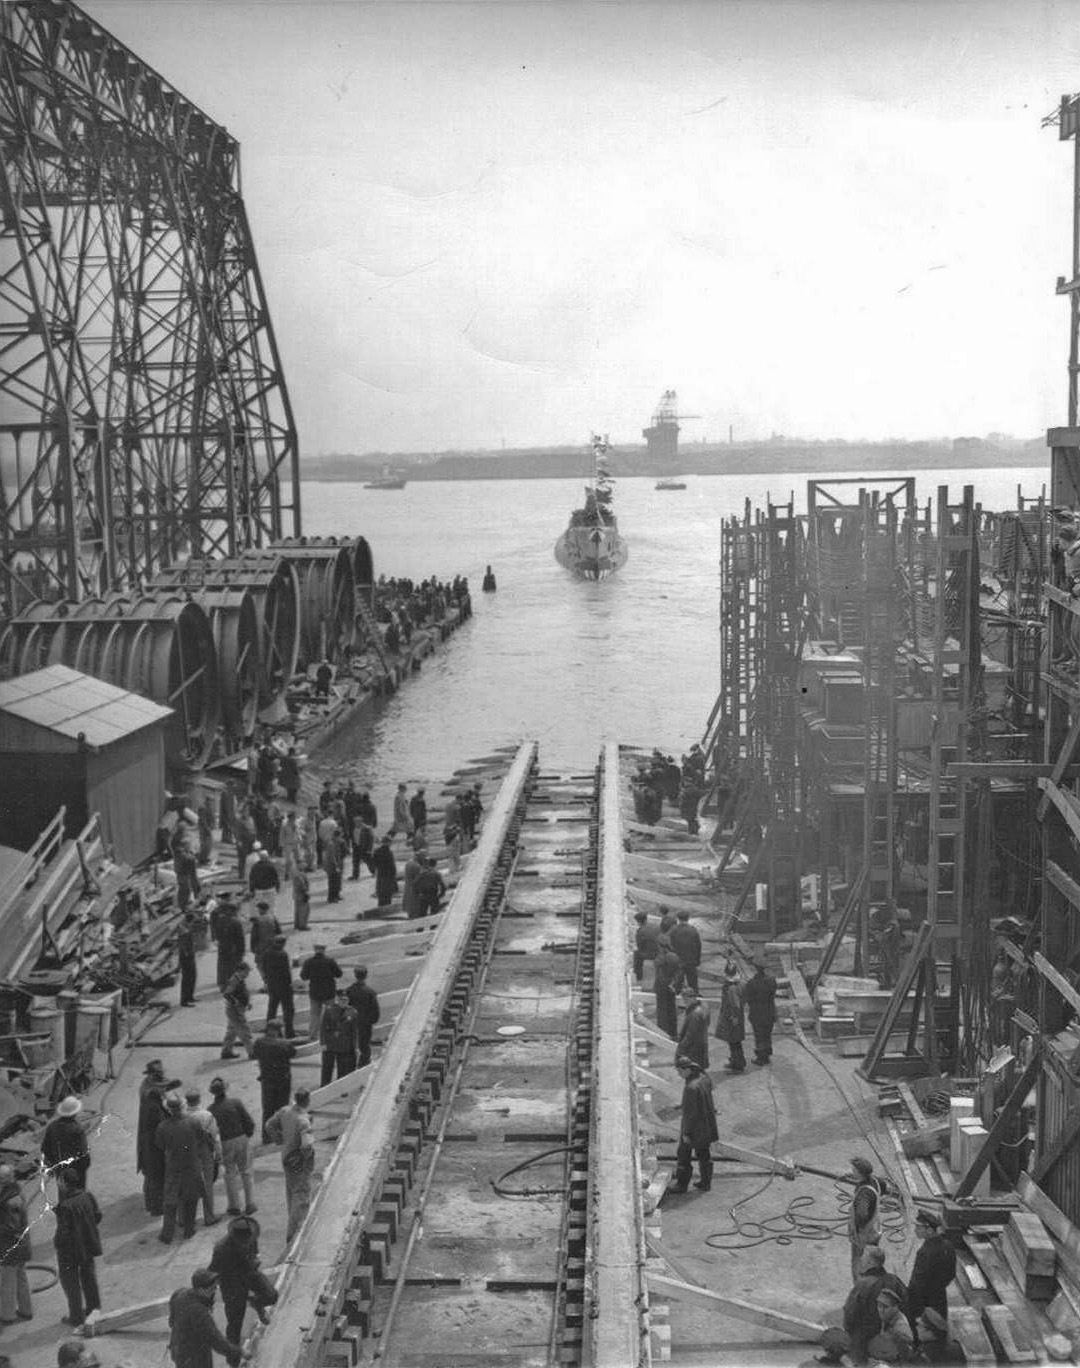 Launching of submarine Dragonet, Philadelphia, Pennsylvania, United States, 18 Apr 1943